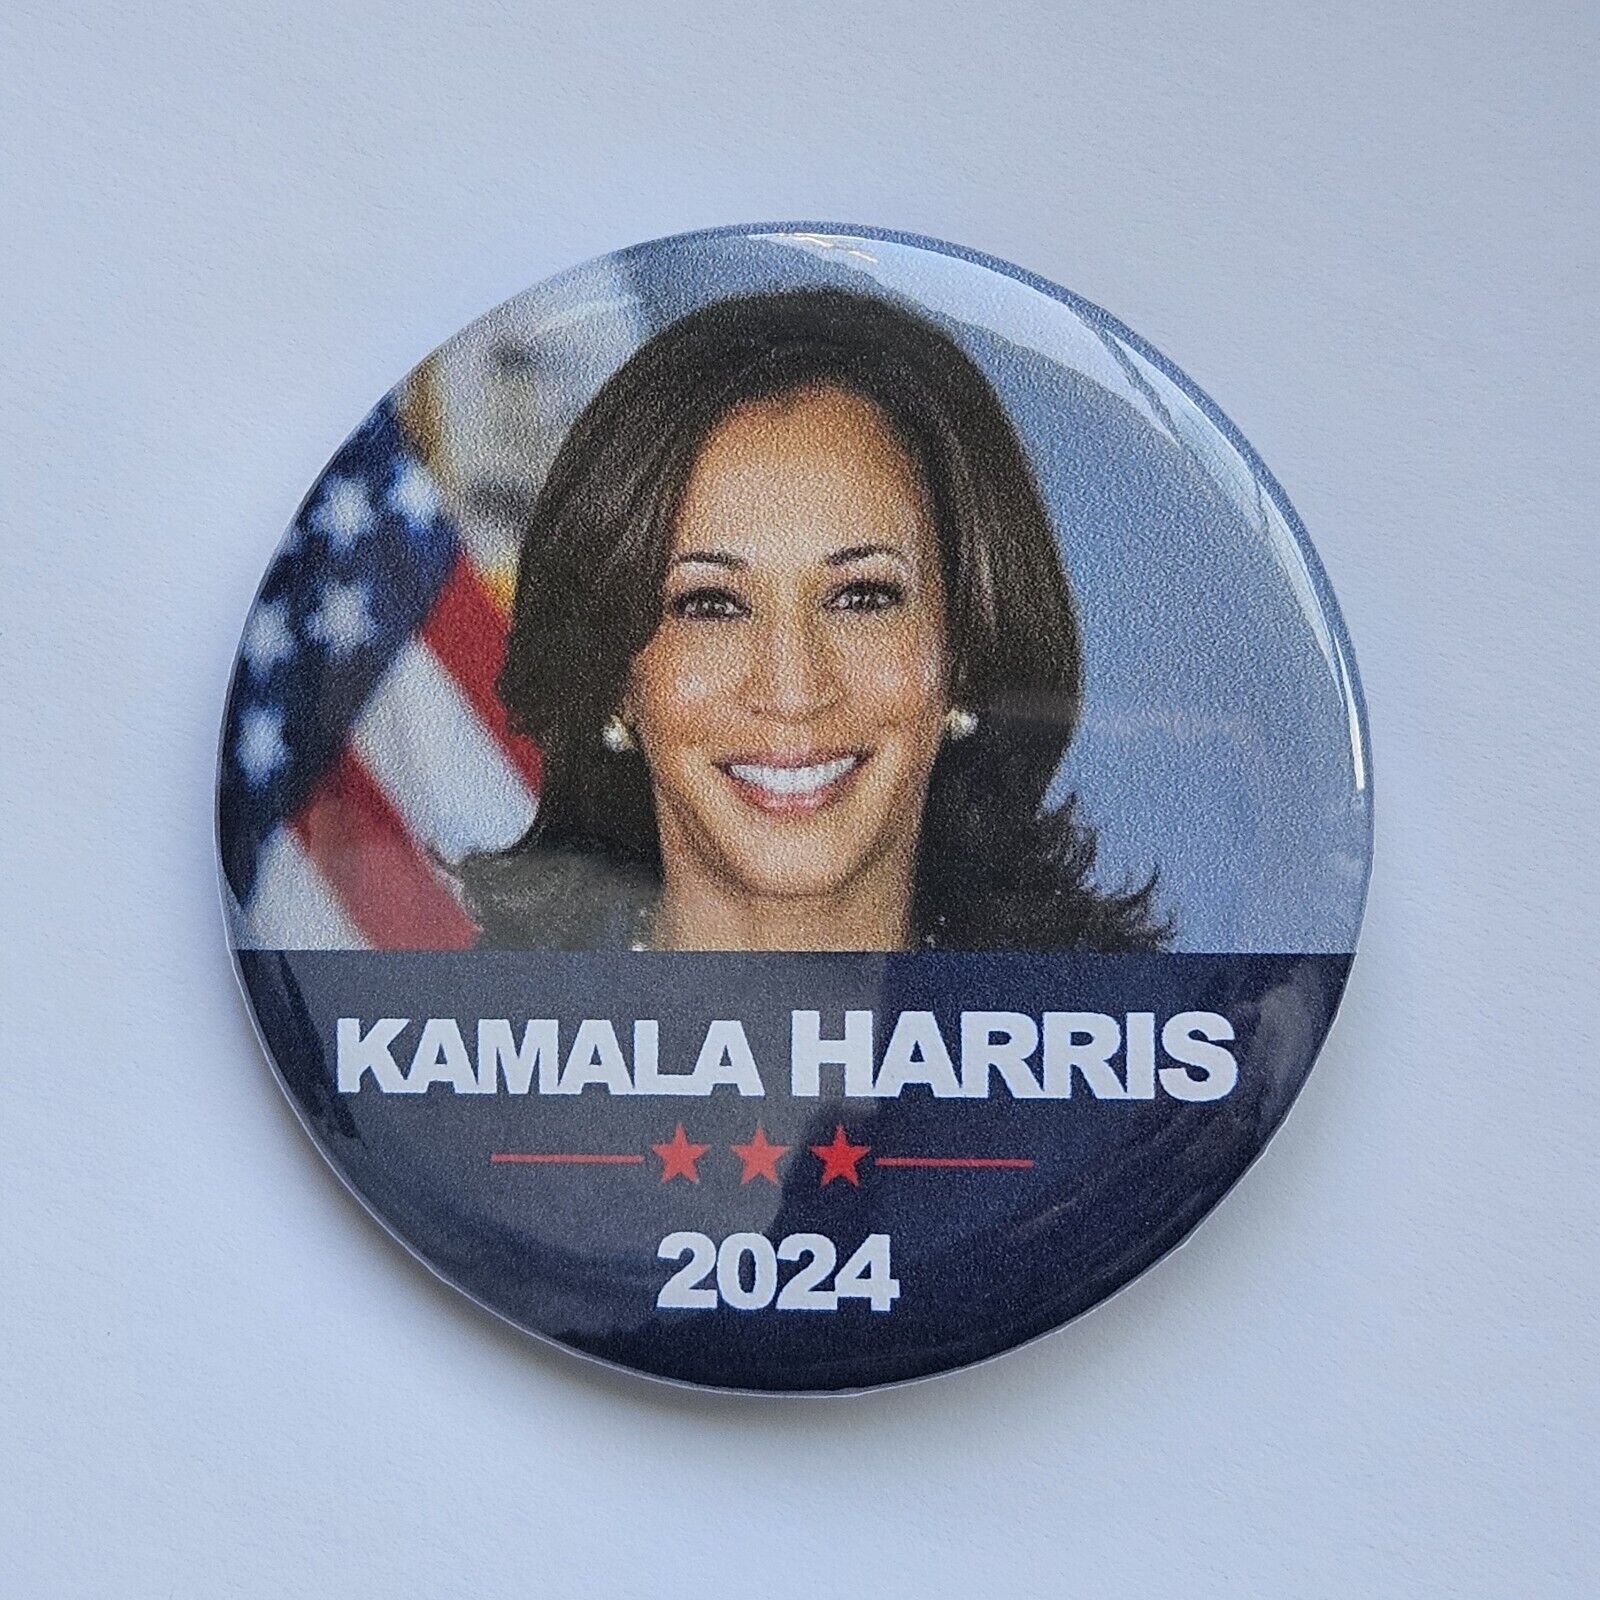 KAMALA HARRIS 2024 campaign pins button 2.25